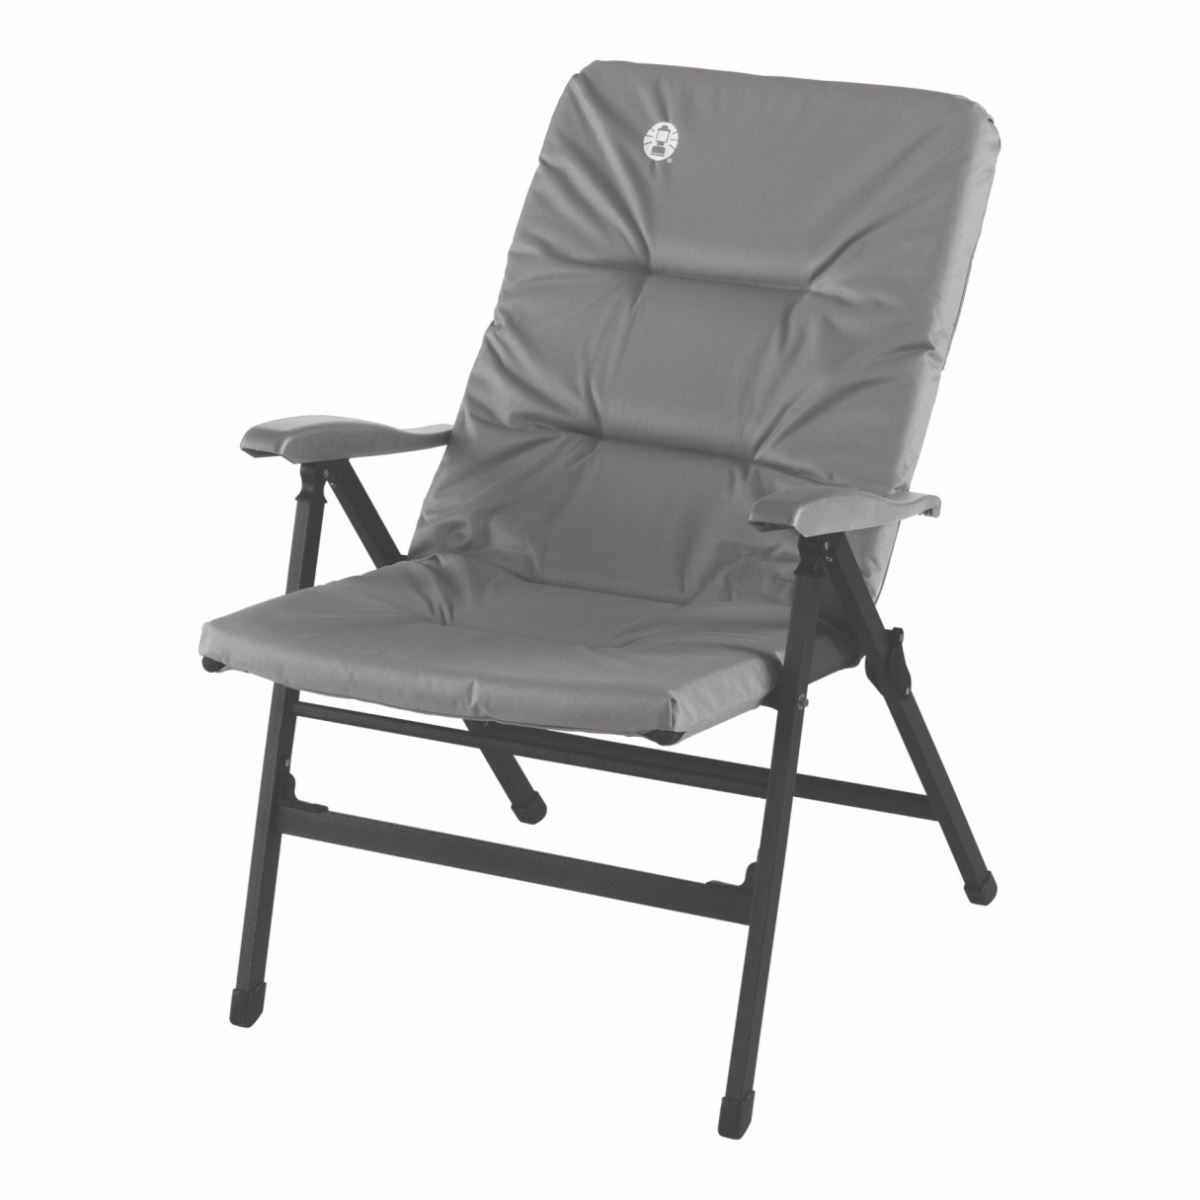 Coleman 8 Position Recliner Chair Steel